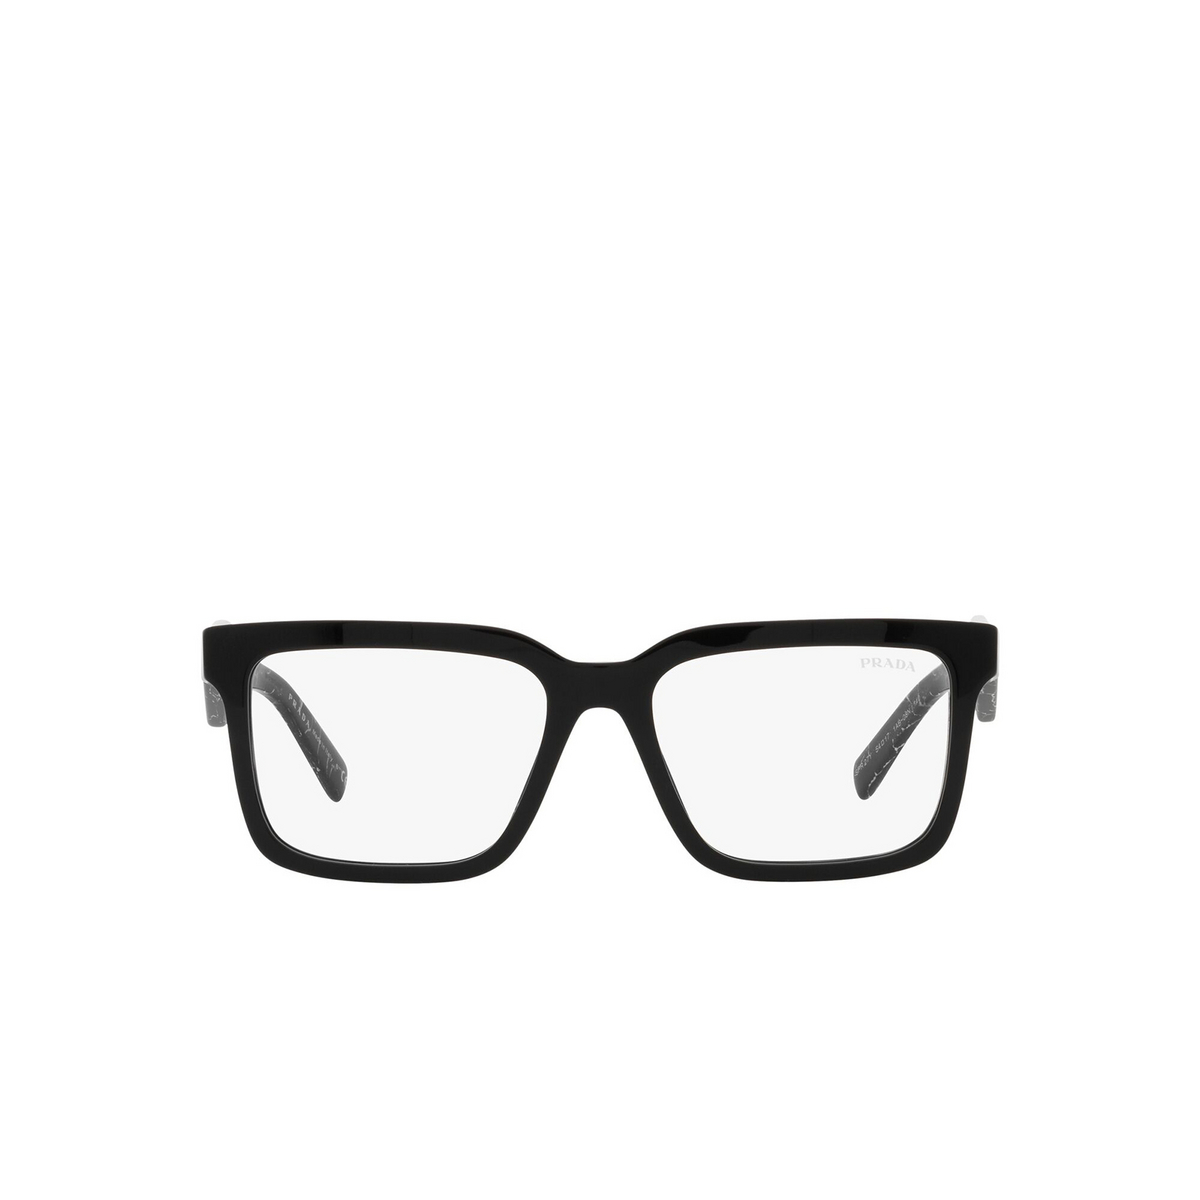 Prada® Square Sunglasses: PR 27YS color Black 1AB08N - front view.